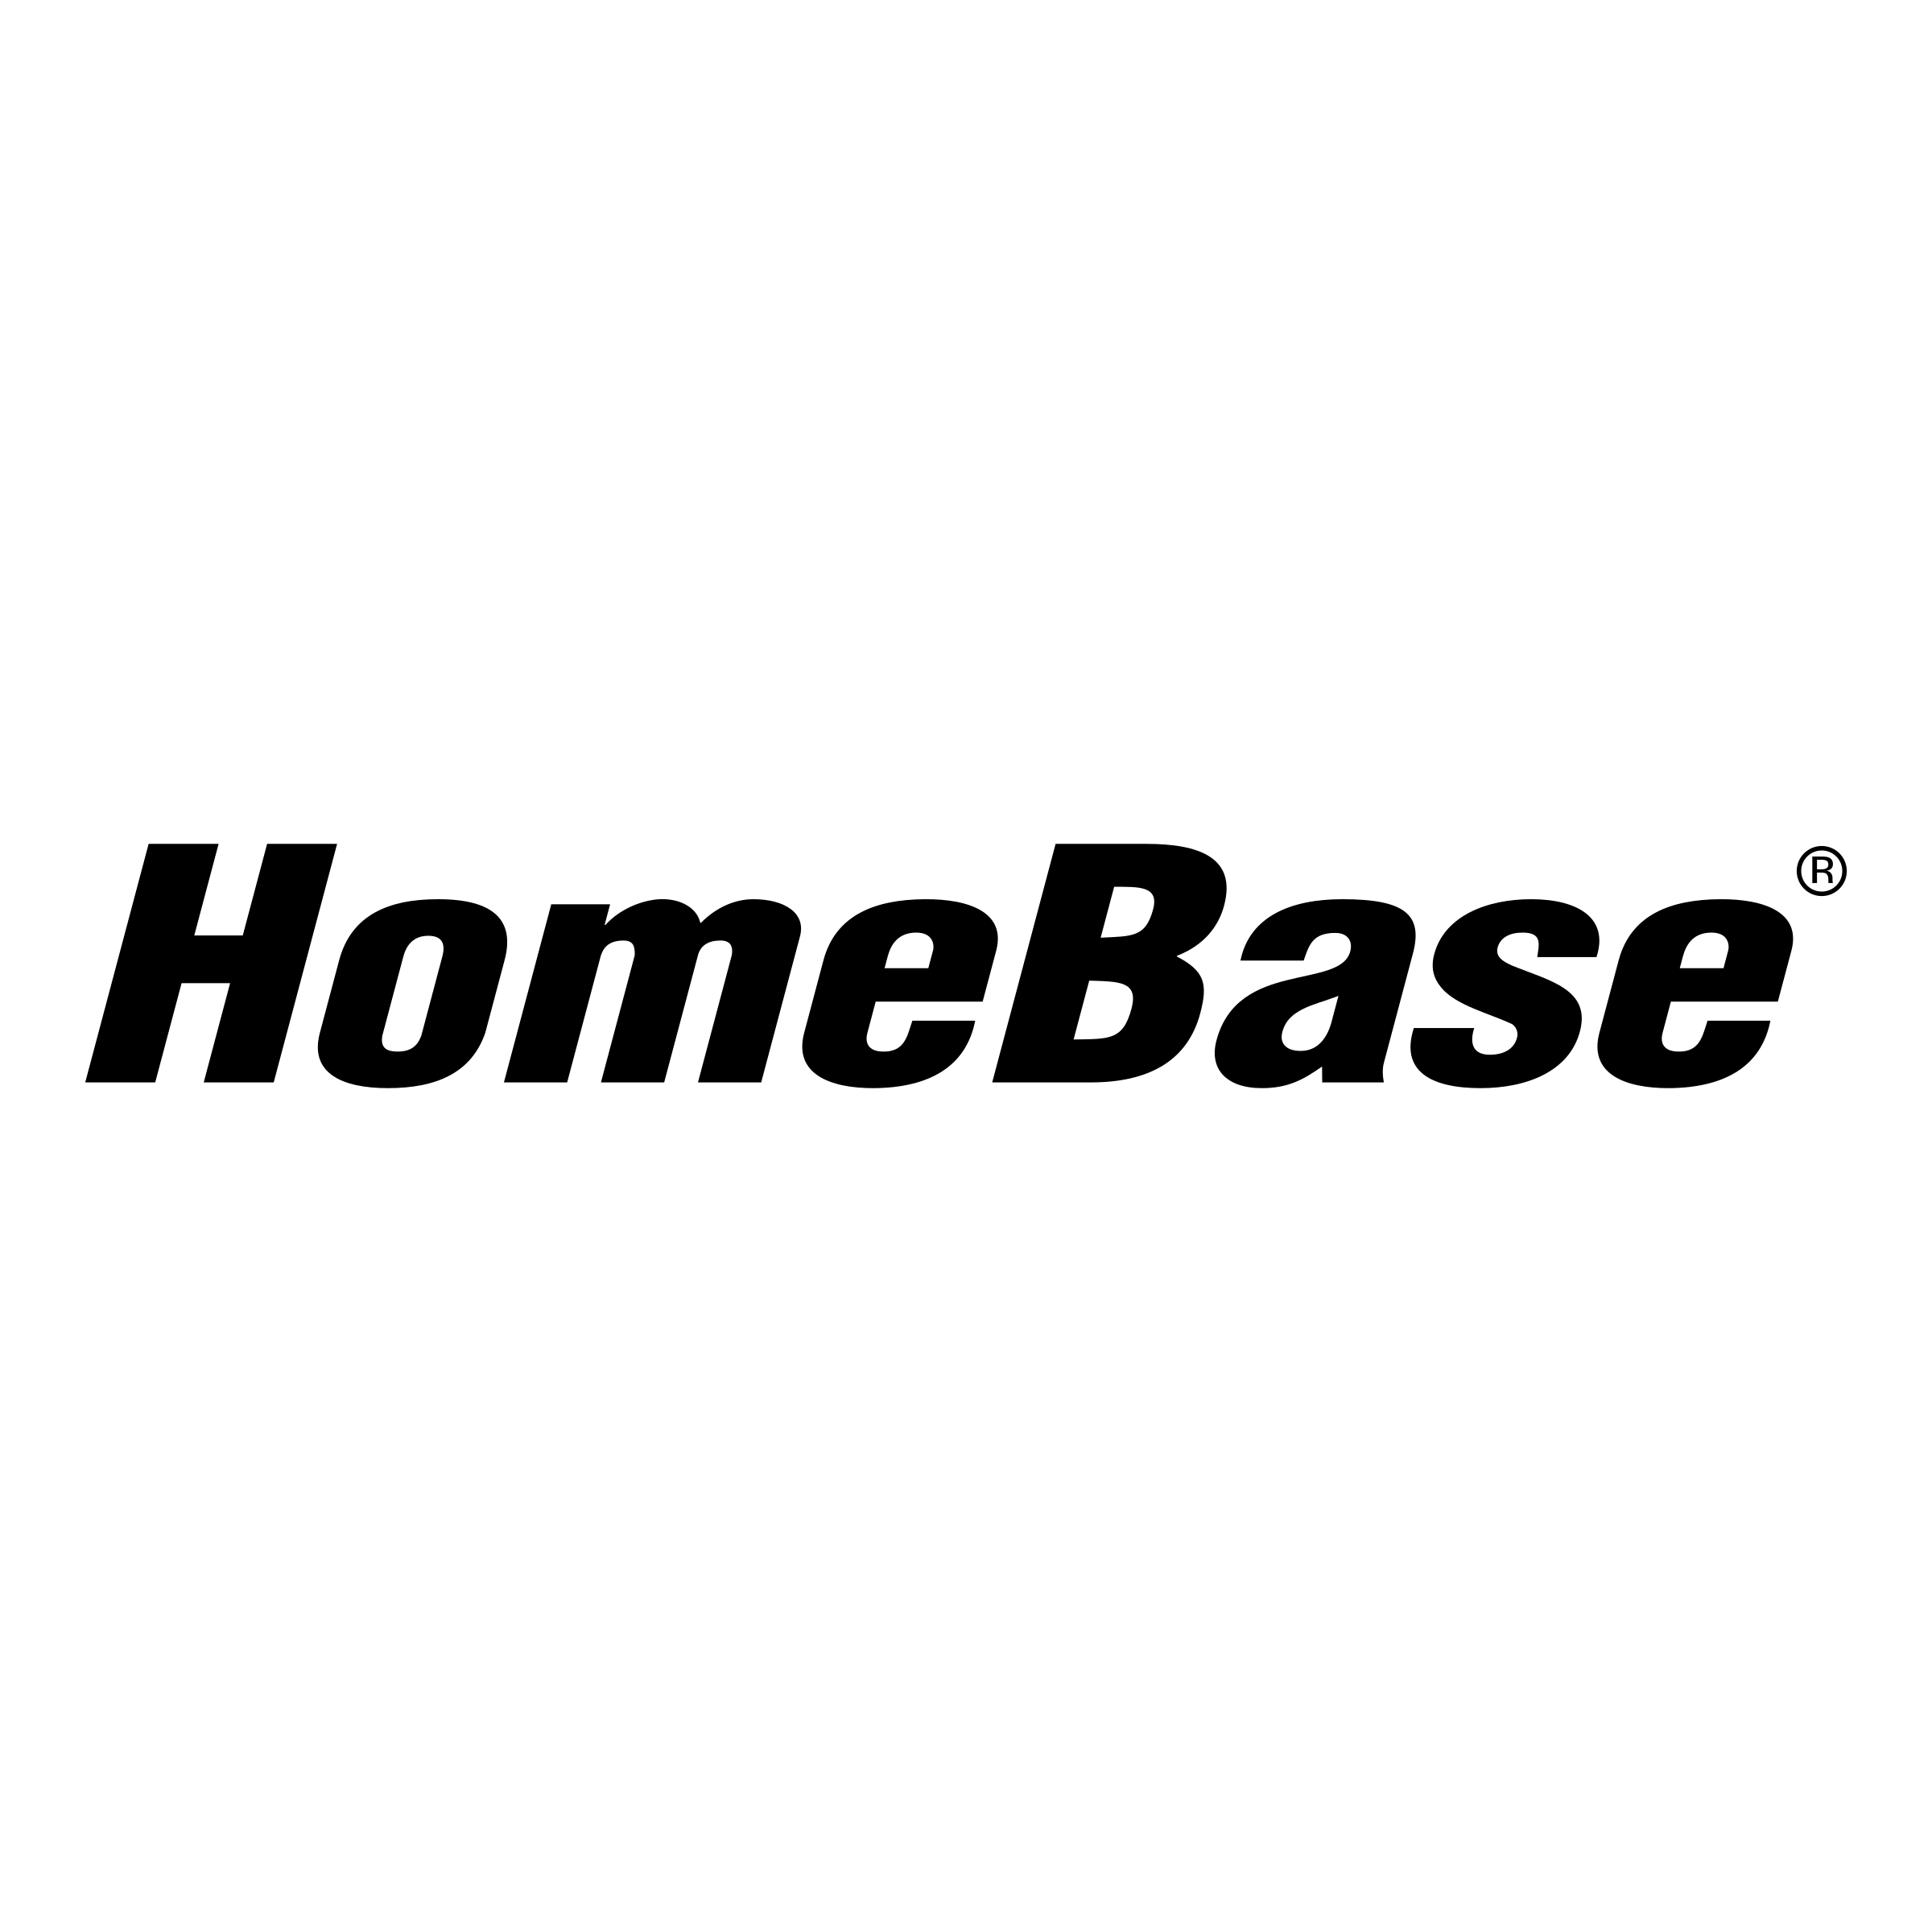 Homebase Logo - HomeBase Logo PNG Transparent & SVG Vector - Freebie Supply